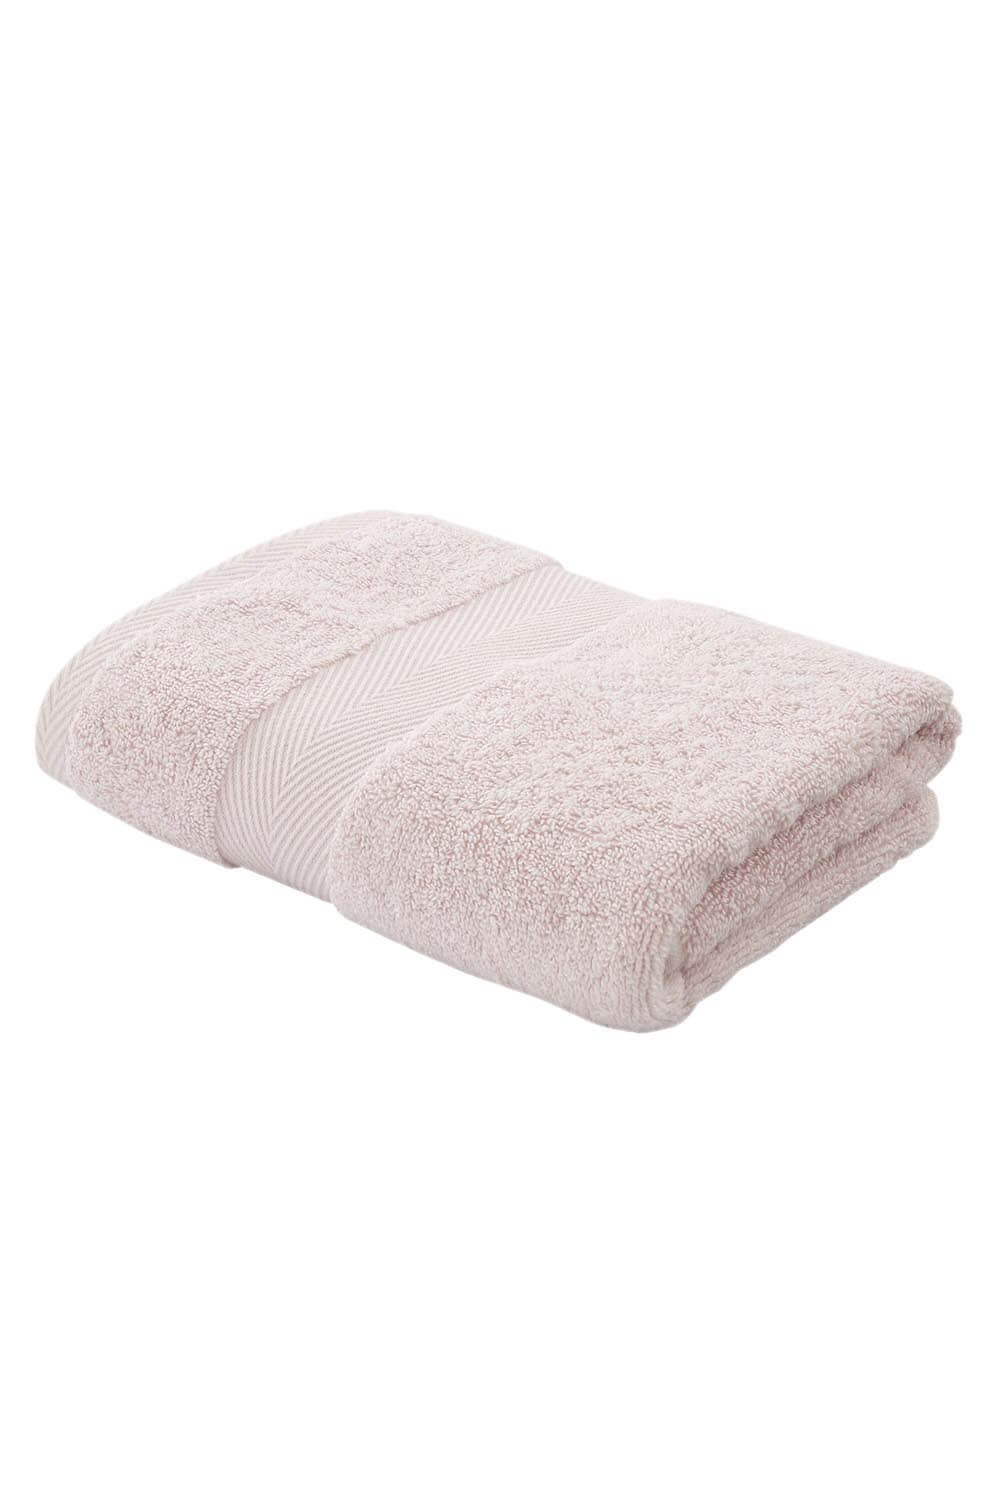 Bianca Silk Hand Towel 50cm x 90cm - Blush 1 Shaws Department Stores